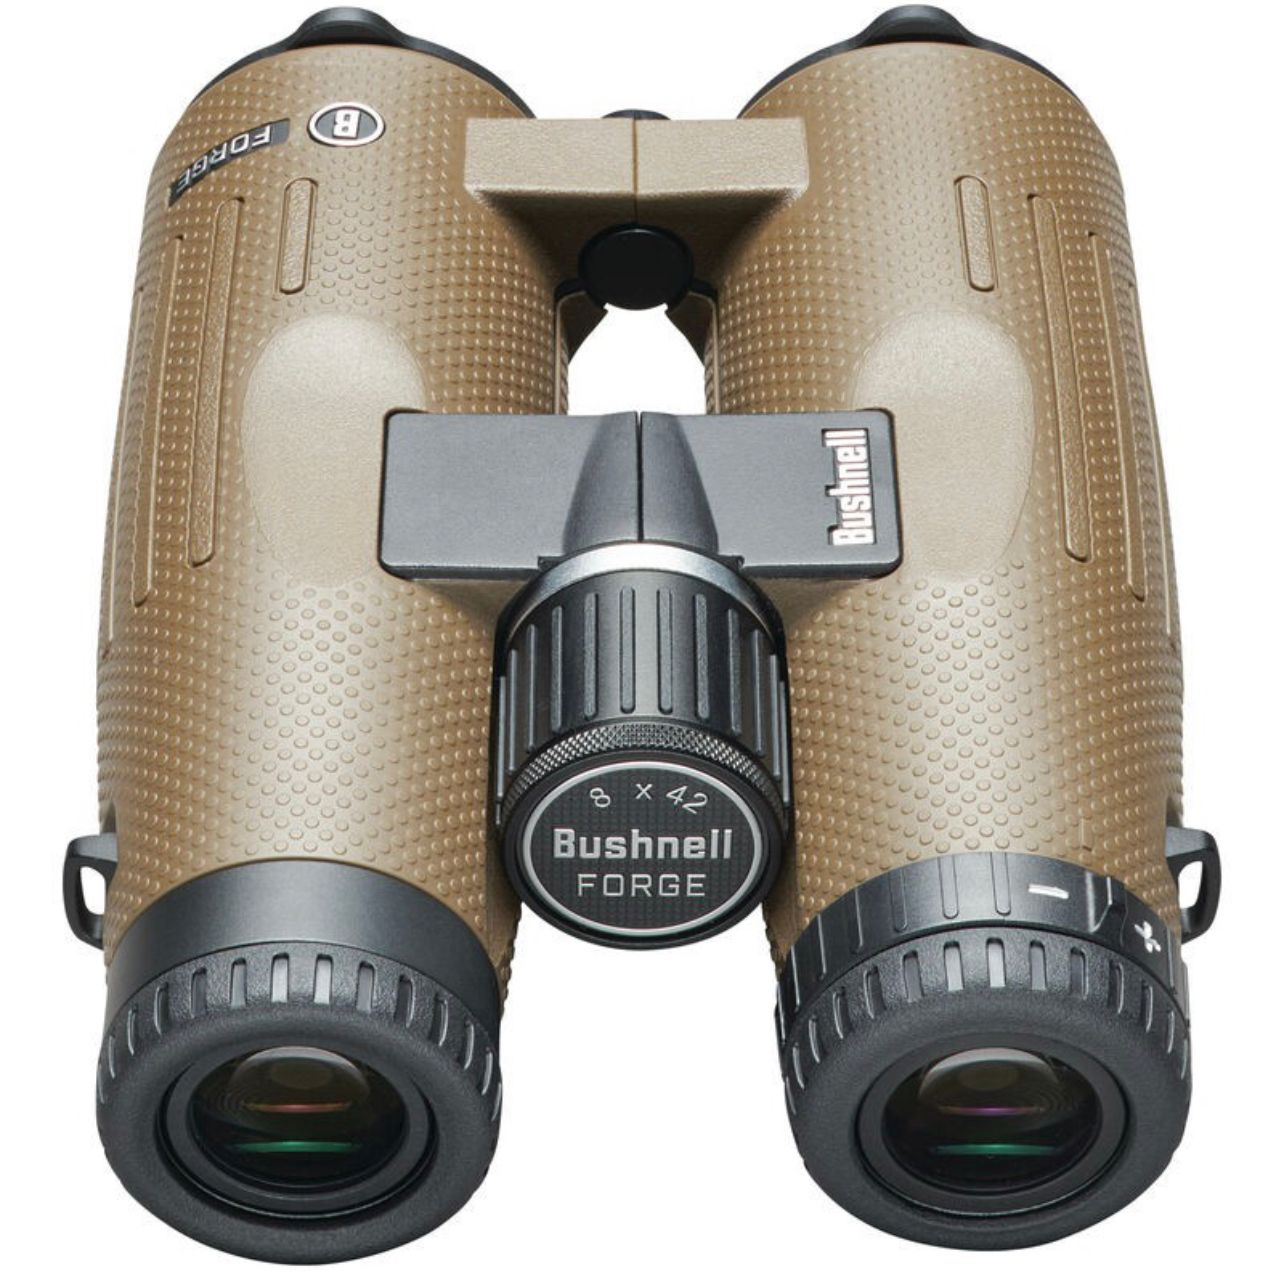 Bushnell Binoculars Forge 8x42 (BF842T) - Limited Lifetime Warranty